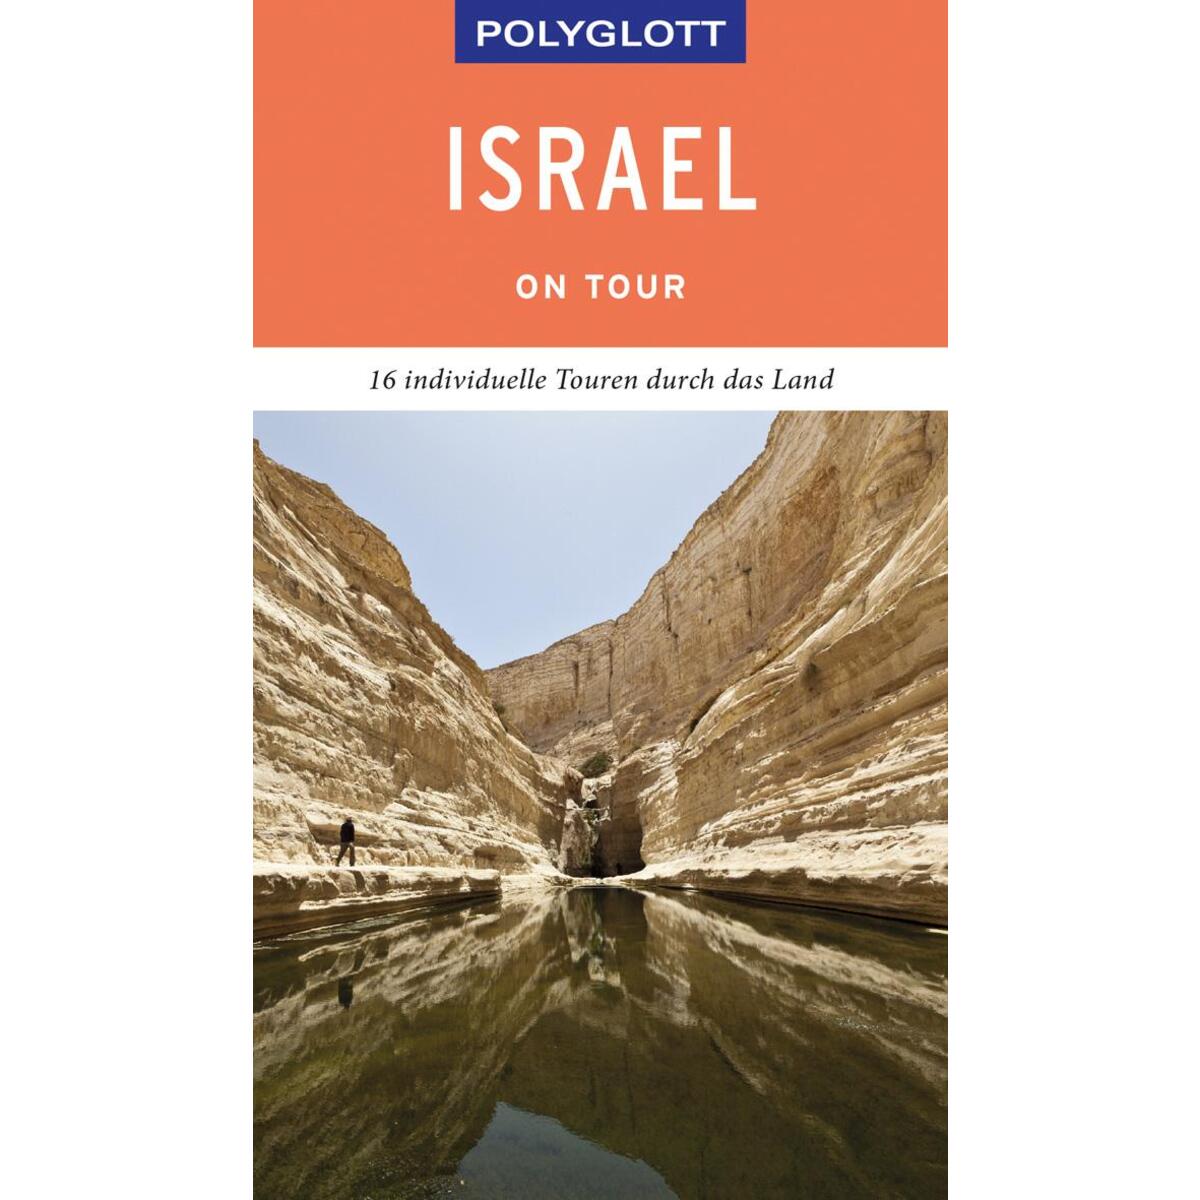 POLYGLOTT on tour Reiseführer Israel von Polyglott Verlag